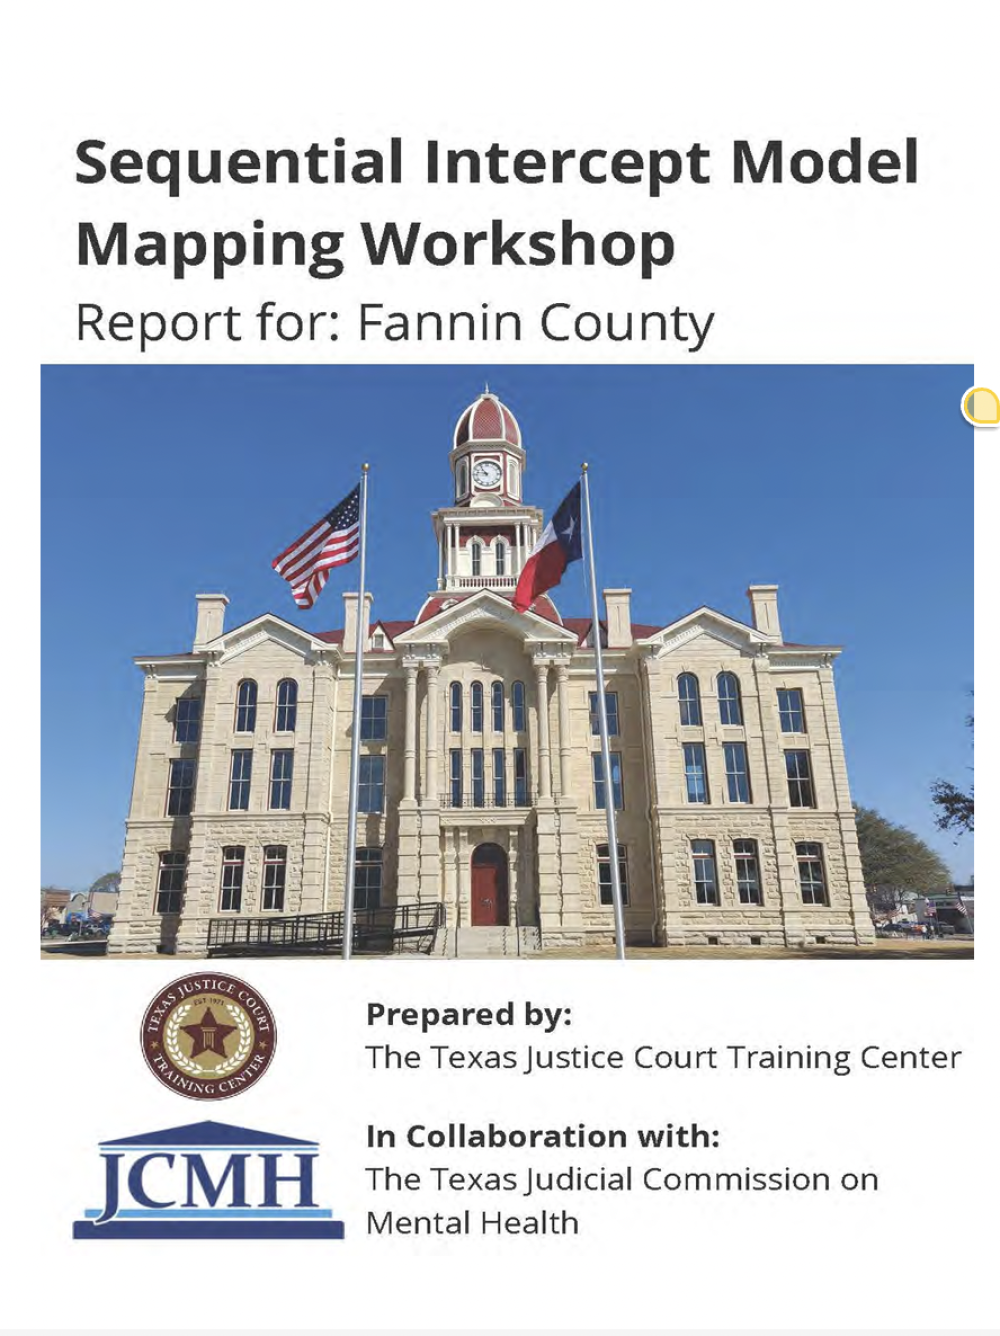 Fannin County SIM Report